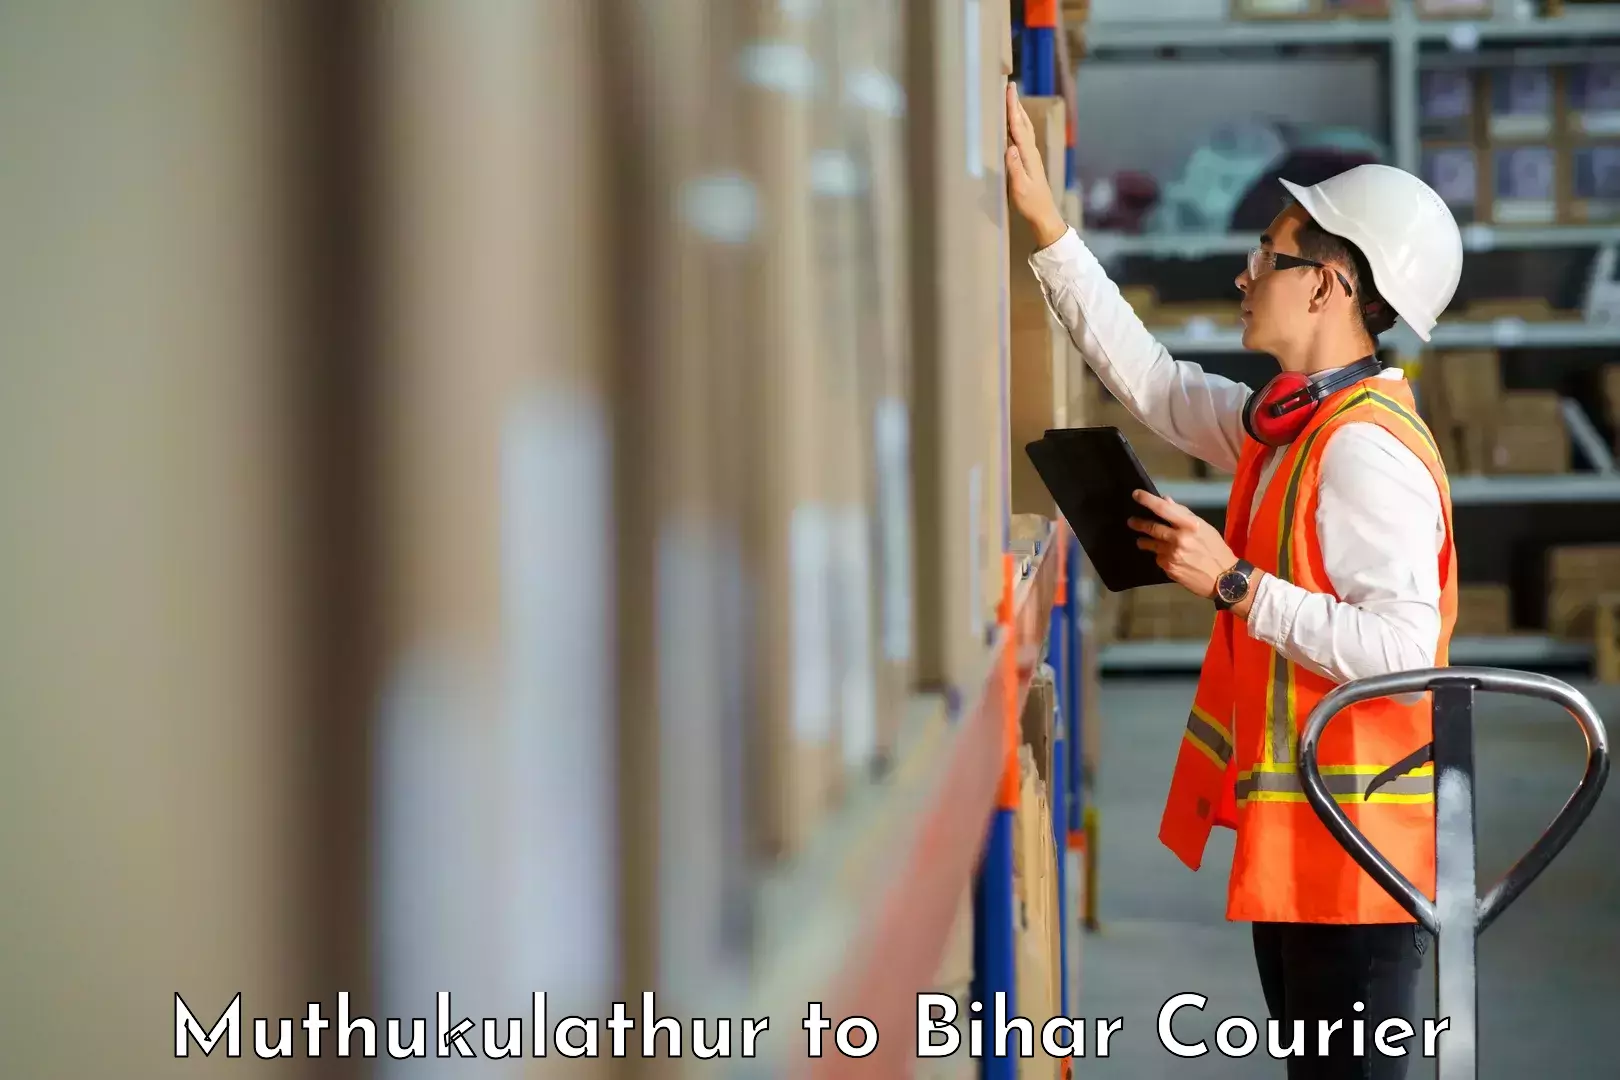 Courier service partnerships Muthukulathur to Bihar